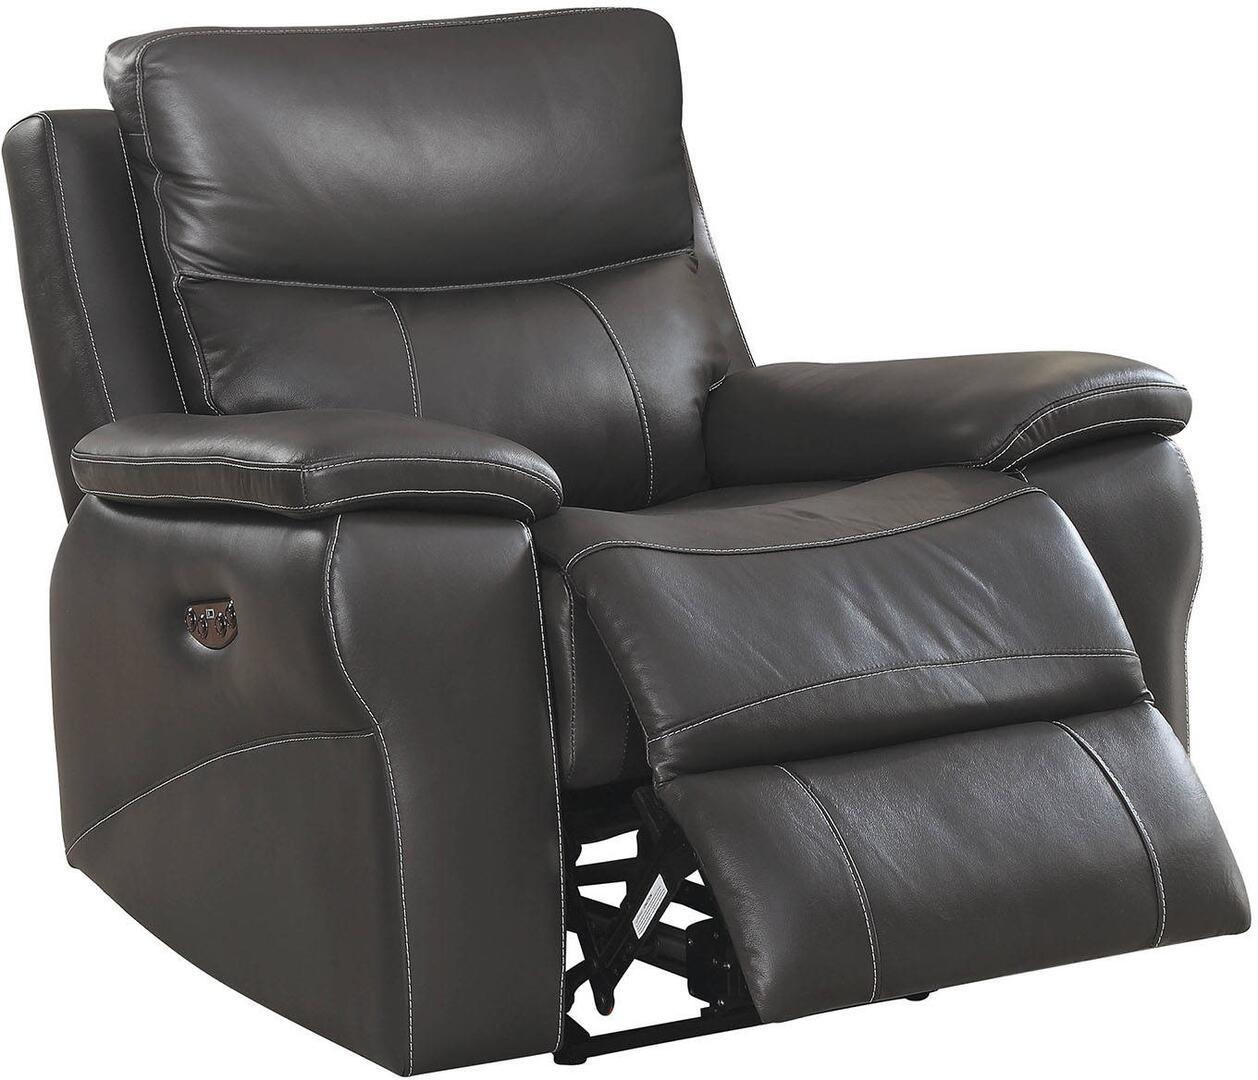 Furniture of America CM6540-PM-CH Lila Power recliner